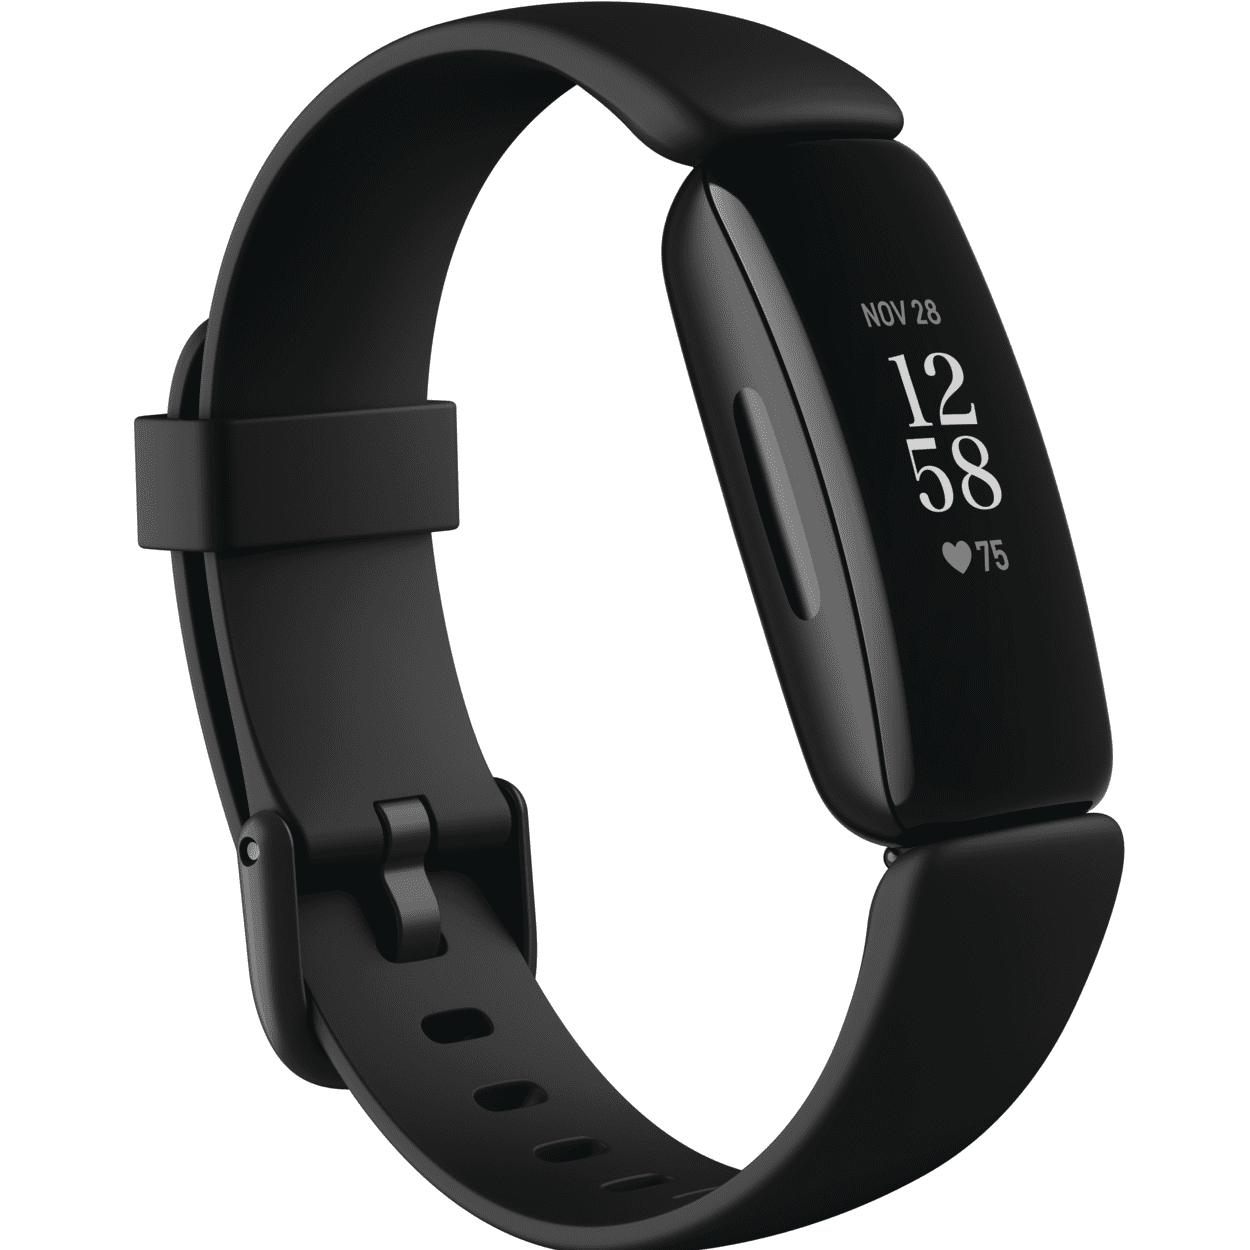 Black FB413BKBK Fitbit Inspire HR Fitness Tracker for sale online 